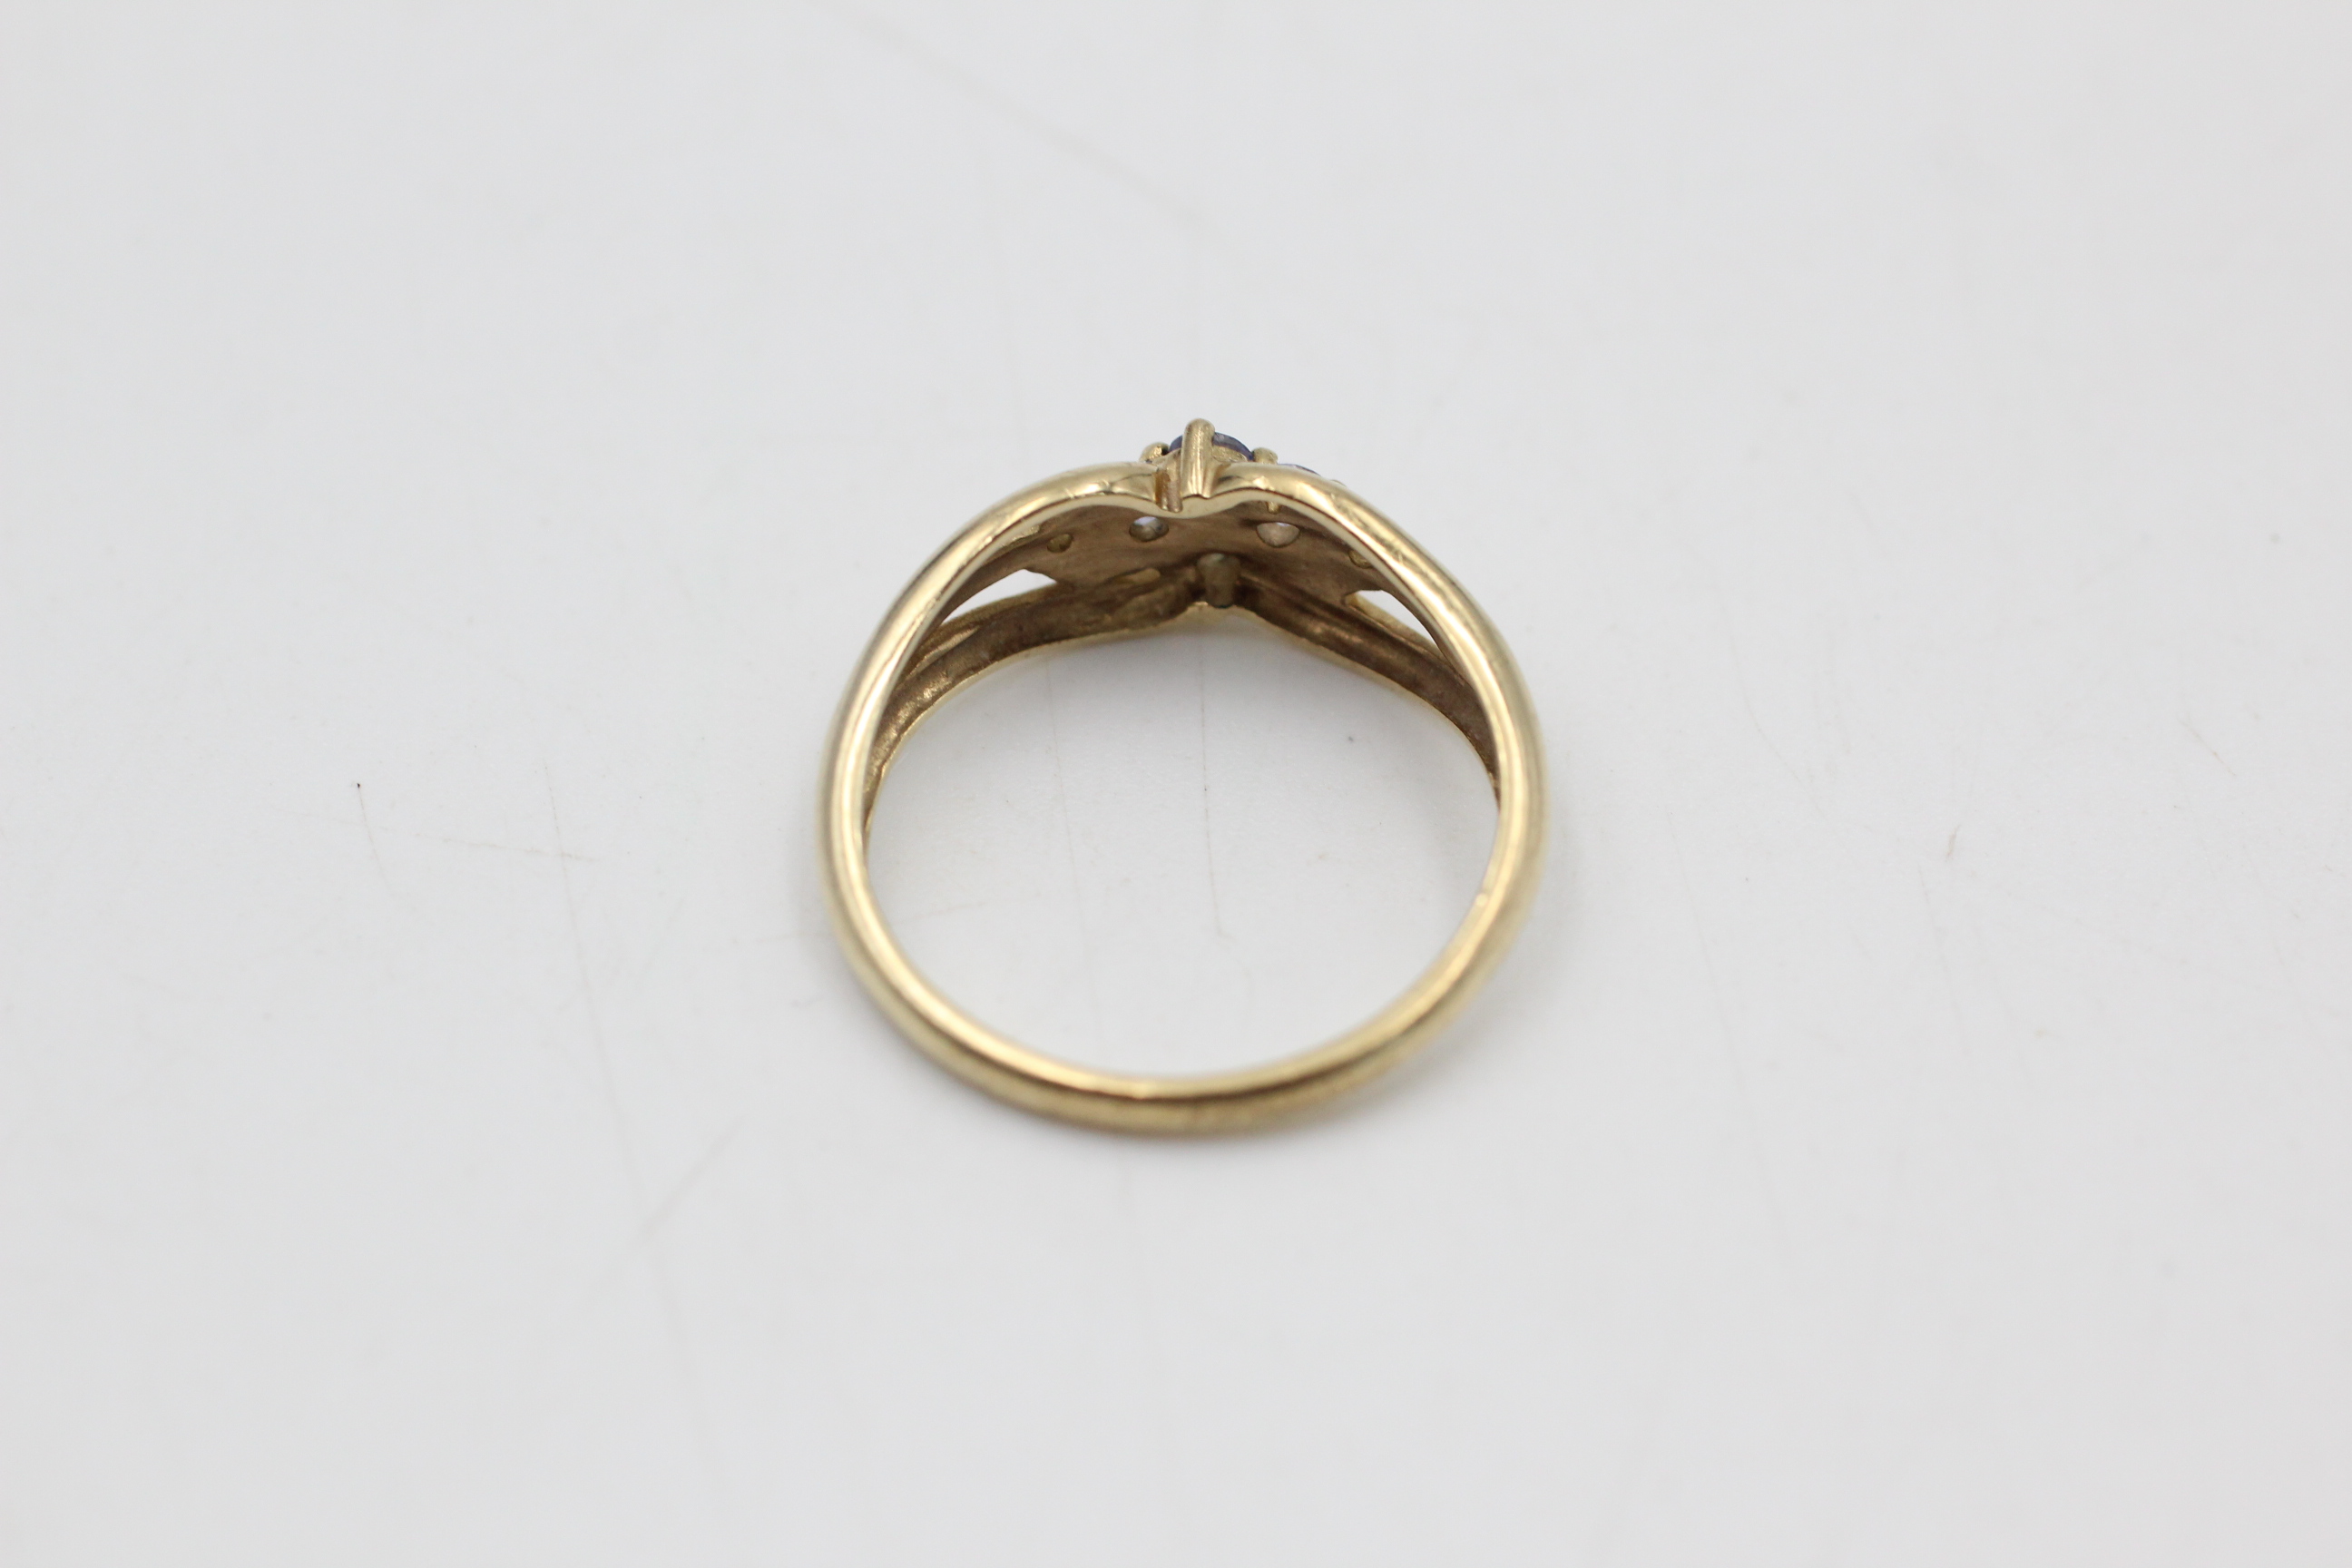 9ct gold diamond & gemstone ring (2g) - Image 3 of 5